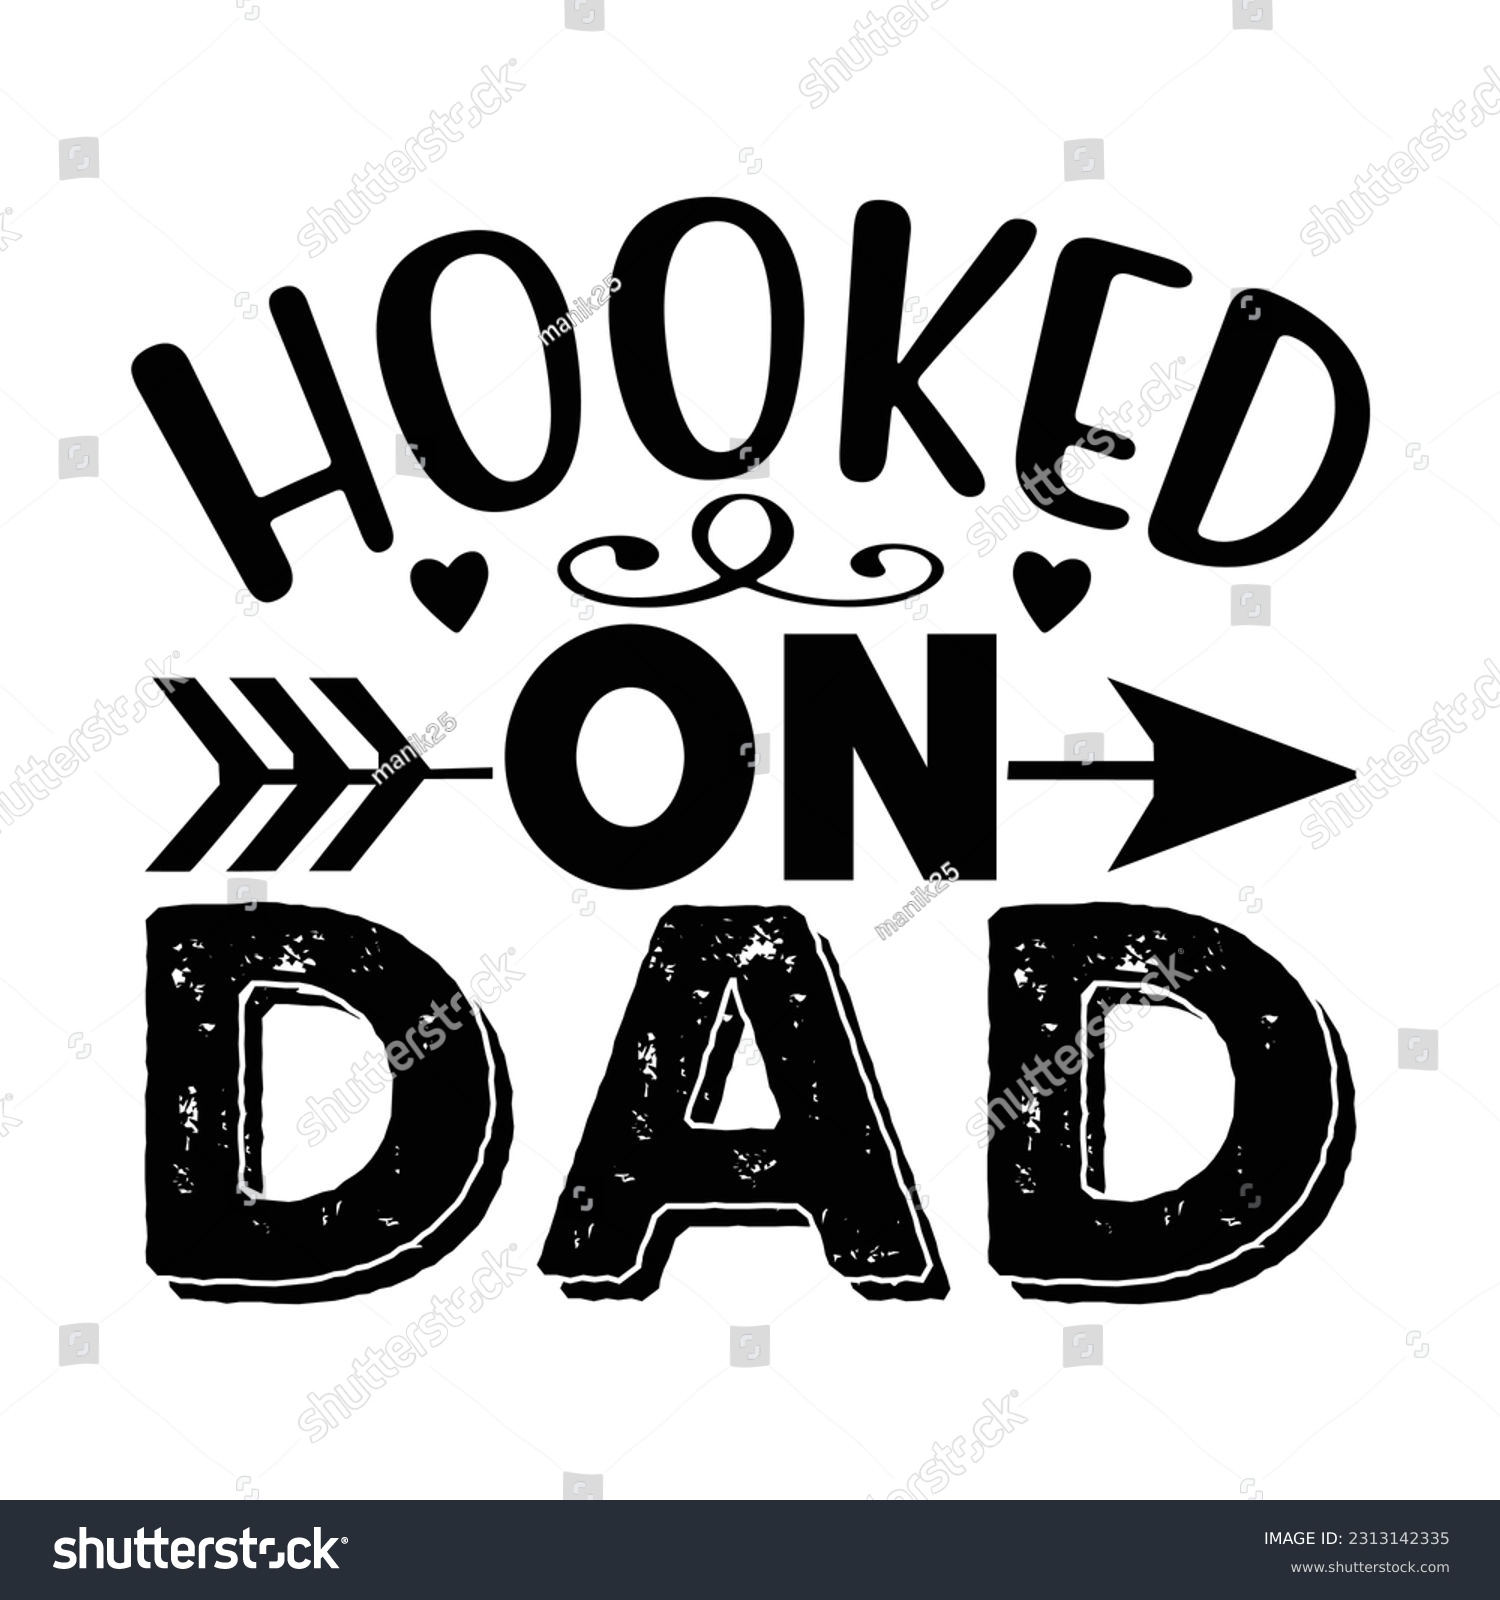 SVG of Hooker on dad,  Fishing SVG Quotes Design Template svg